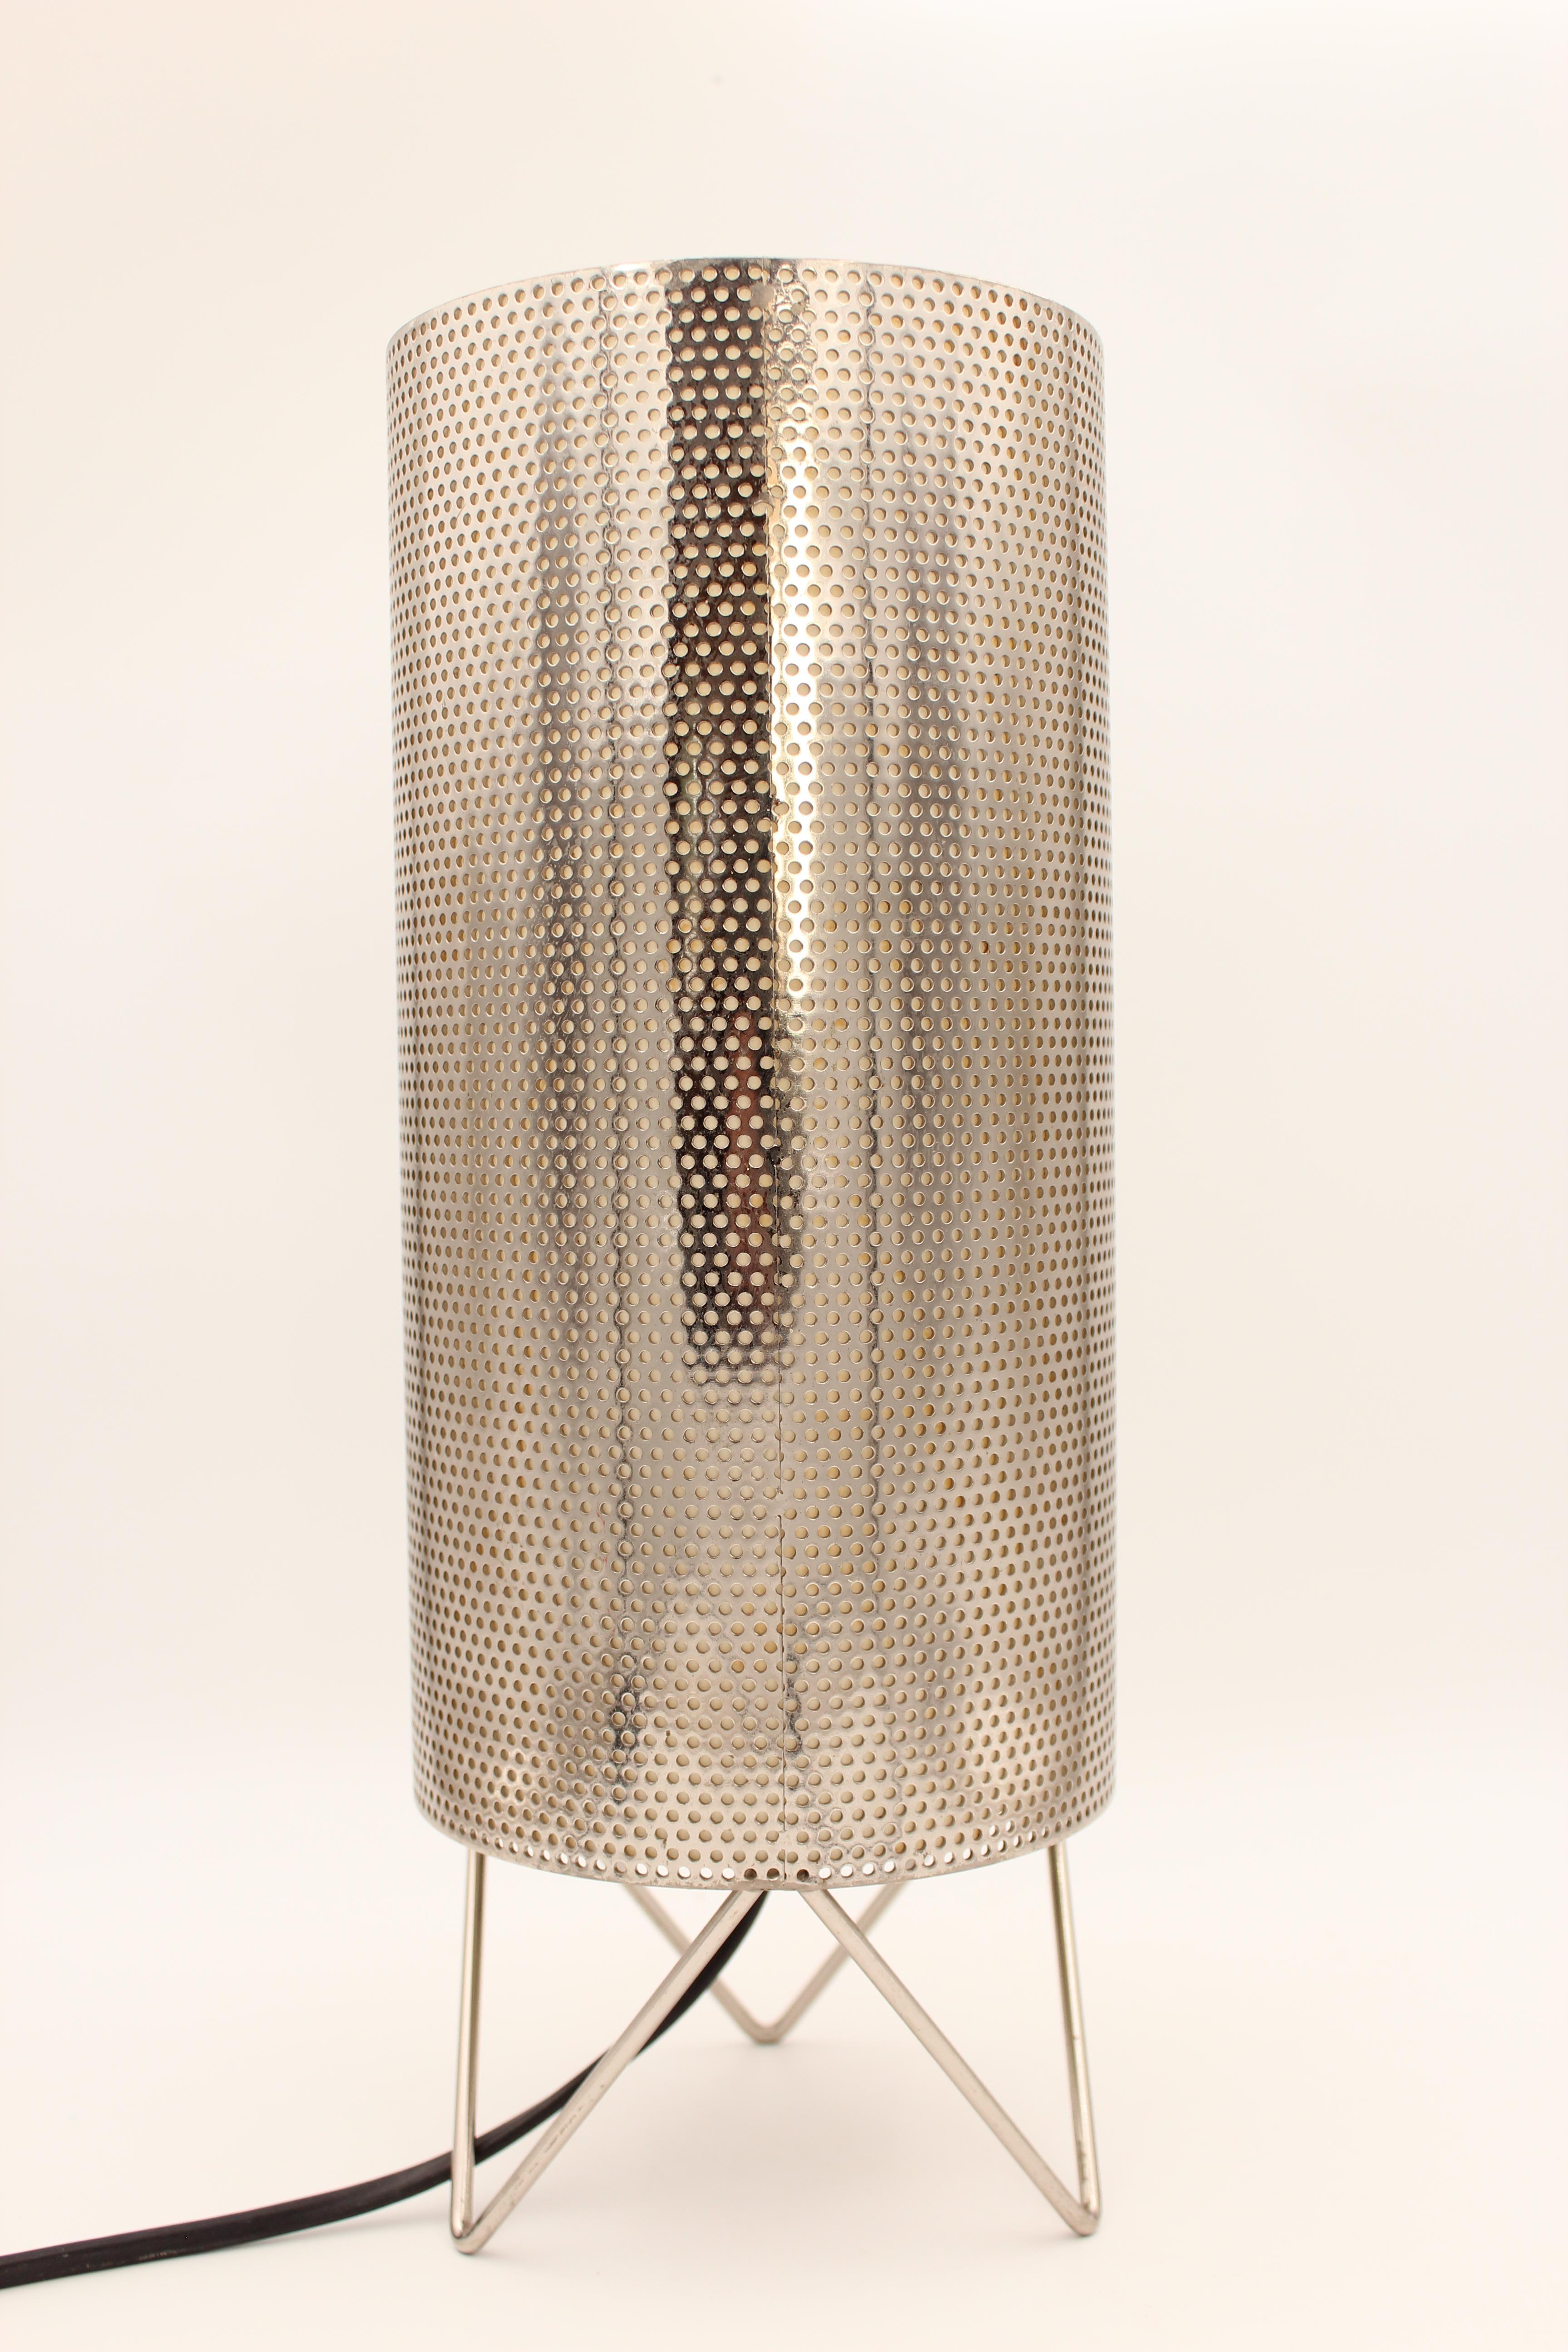 Perforated Metal Table Lamp by Barba Corsini for Gaudi's Casa Mila (Spanisch)